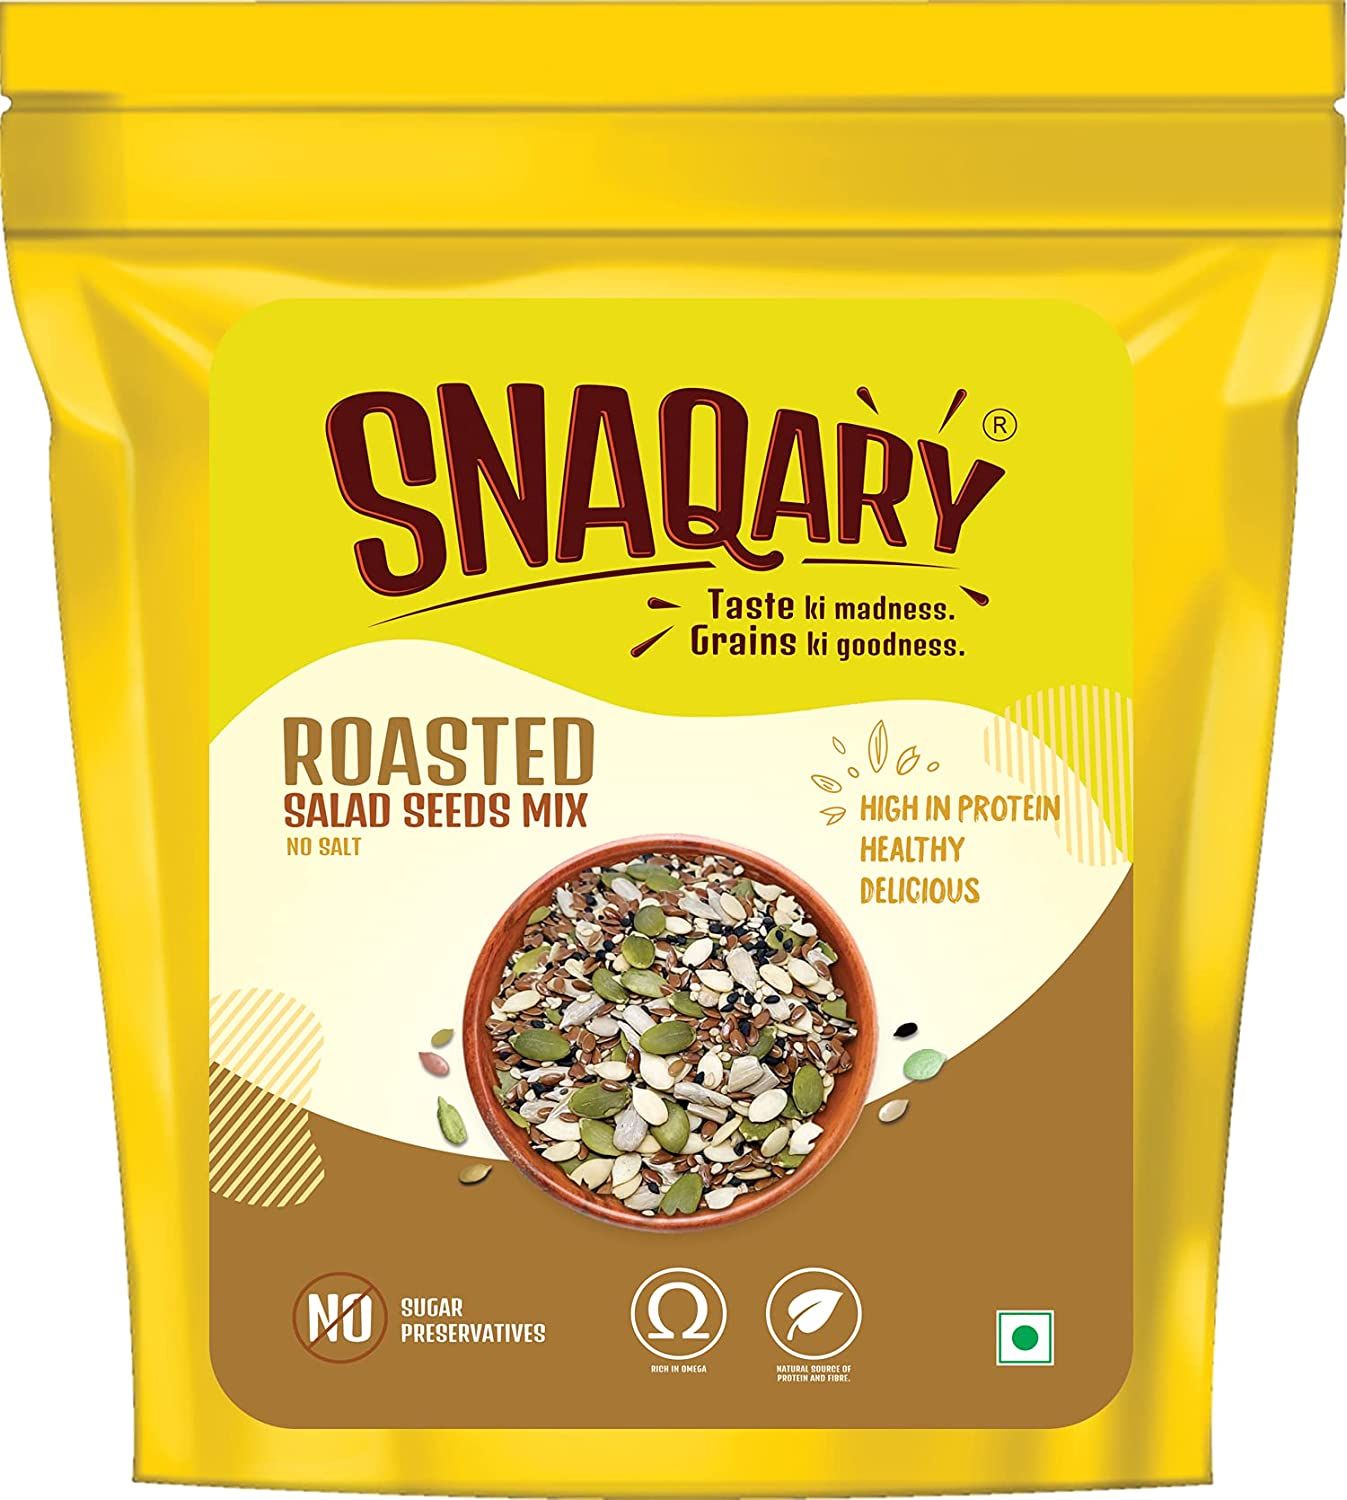 Snaqary Roasted Salad Seeds Mix Image